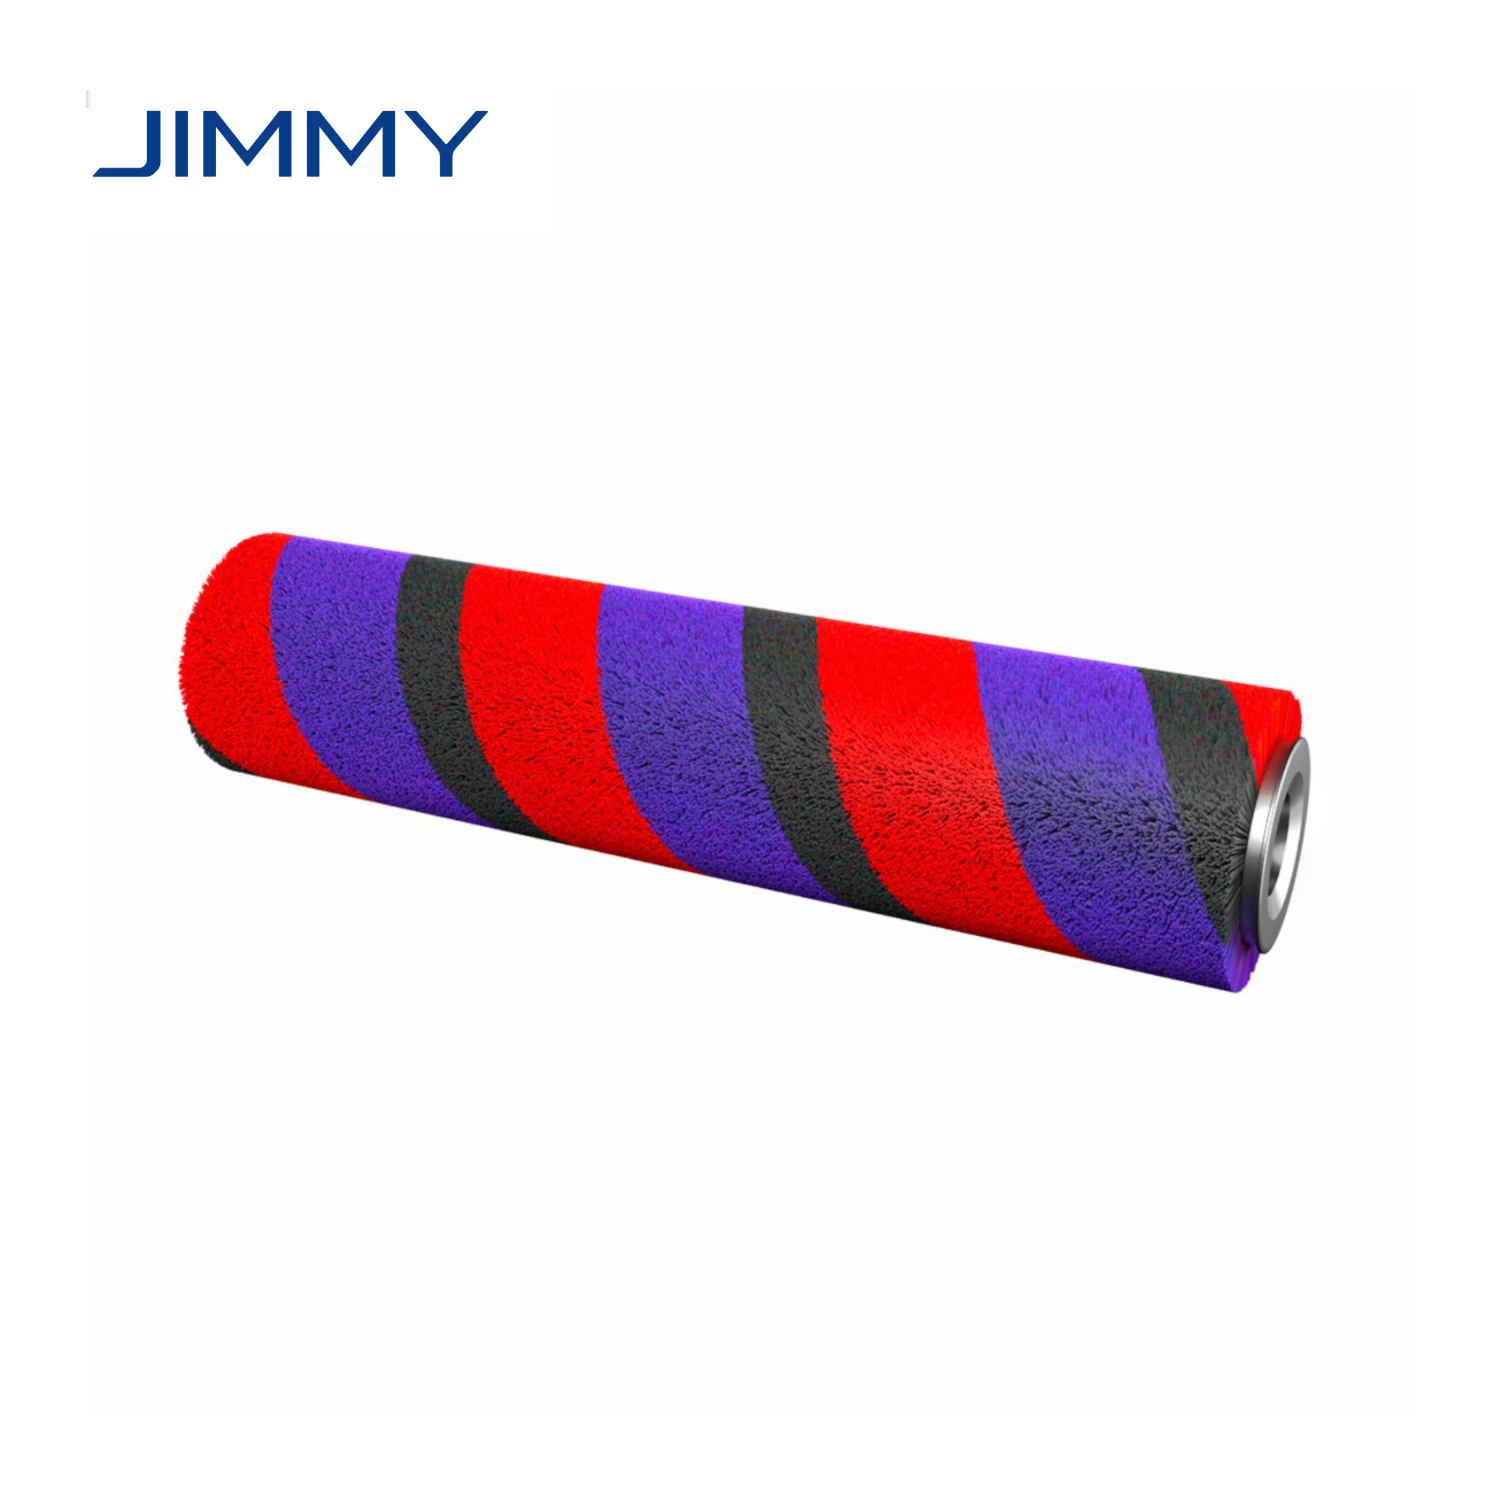 Щетка-валик Jimmy Brushroll щетка валик jimmy carpet brushroll